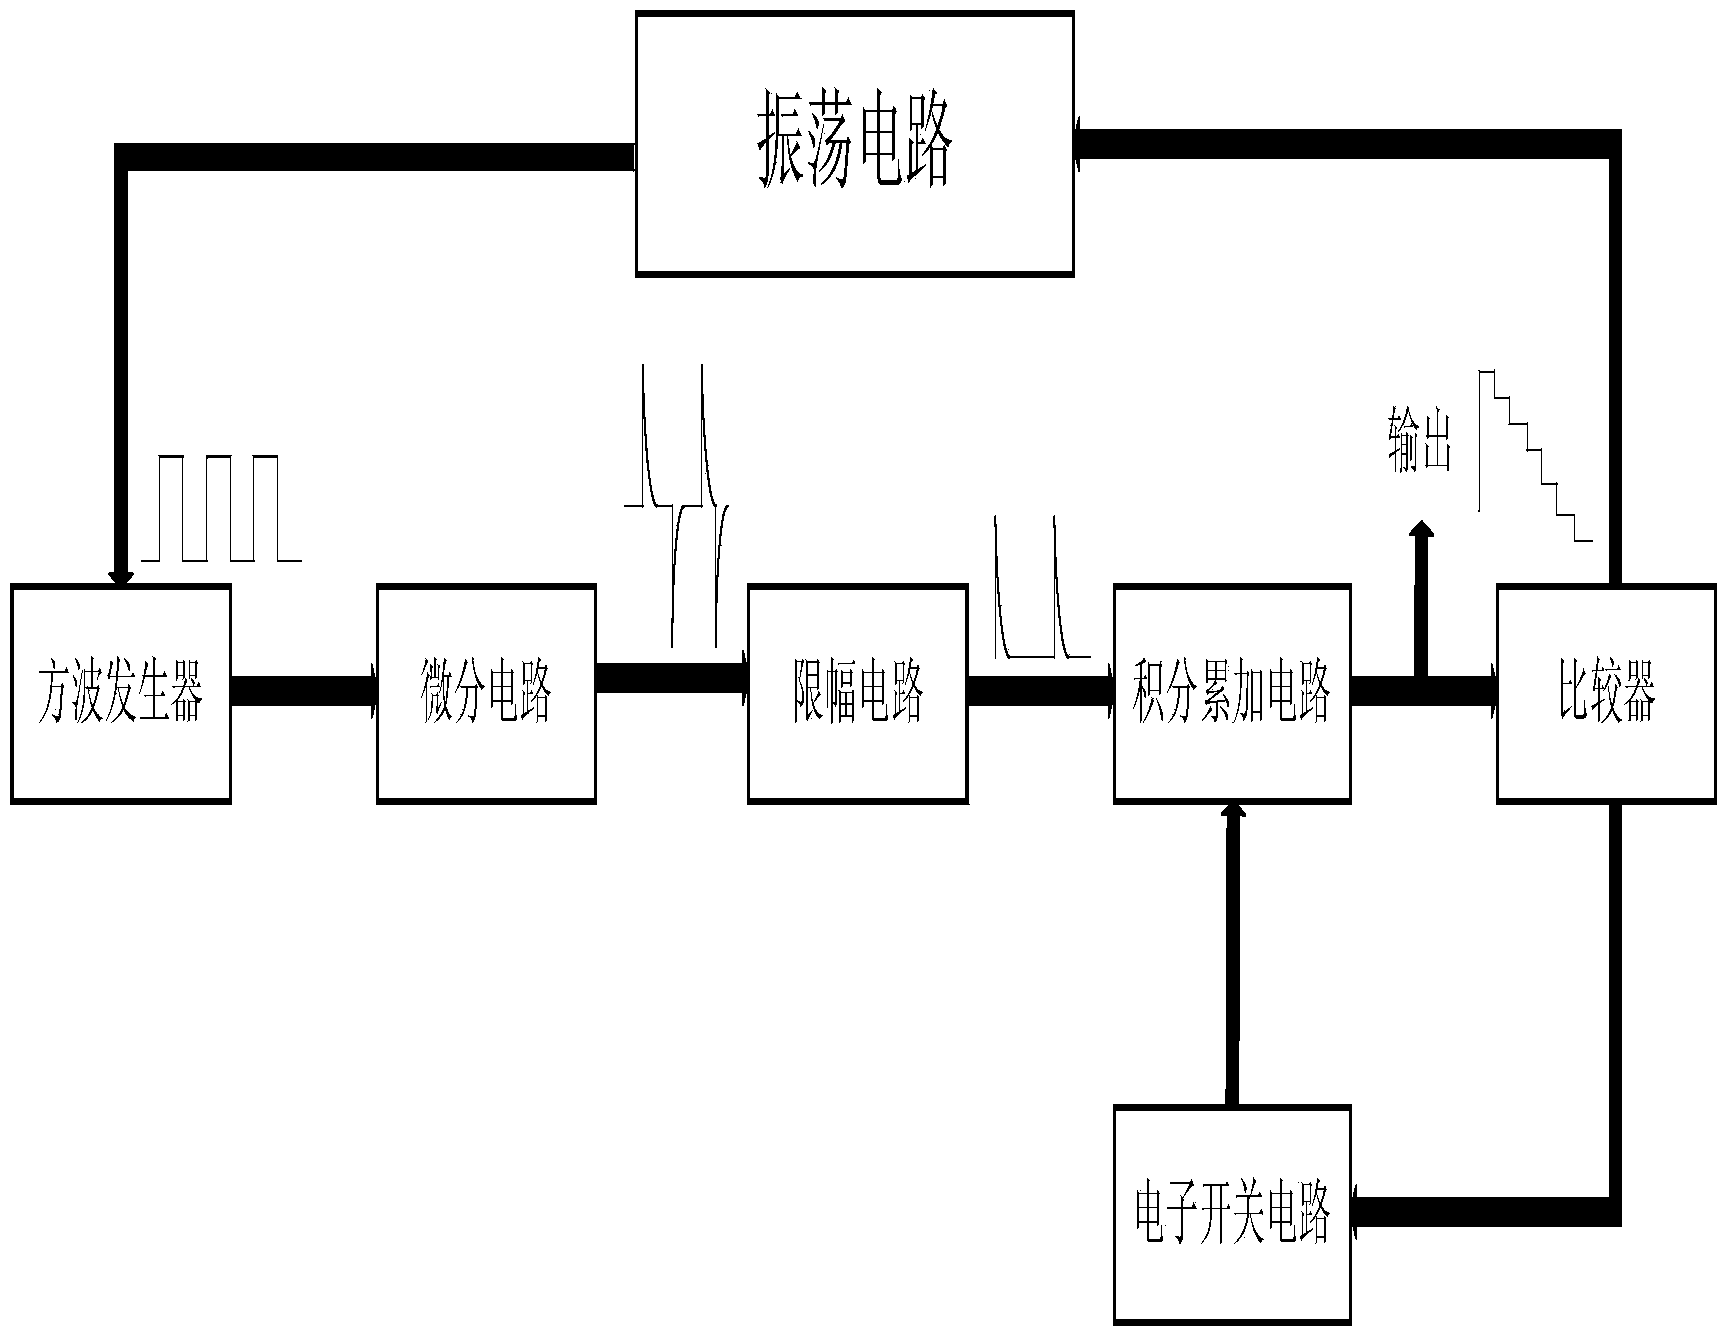 Step wave generating circuit